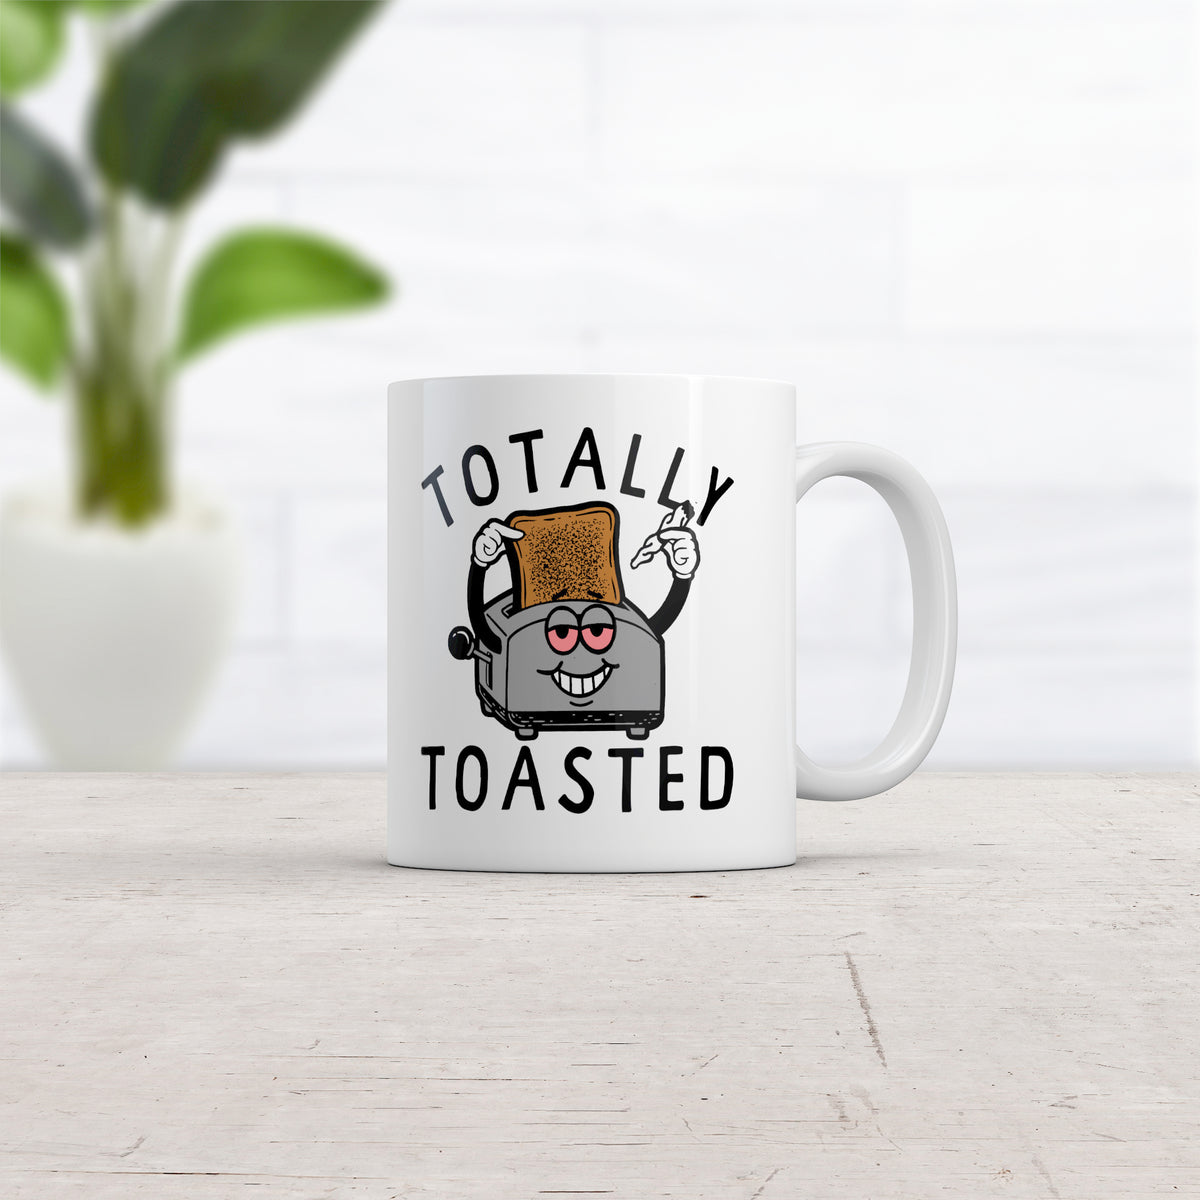 Totally Toasted Mug